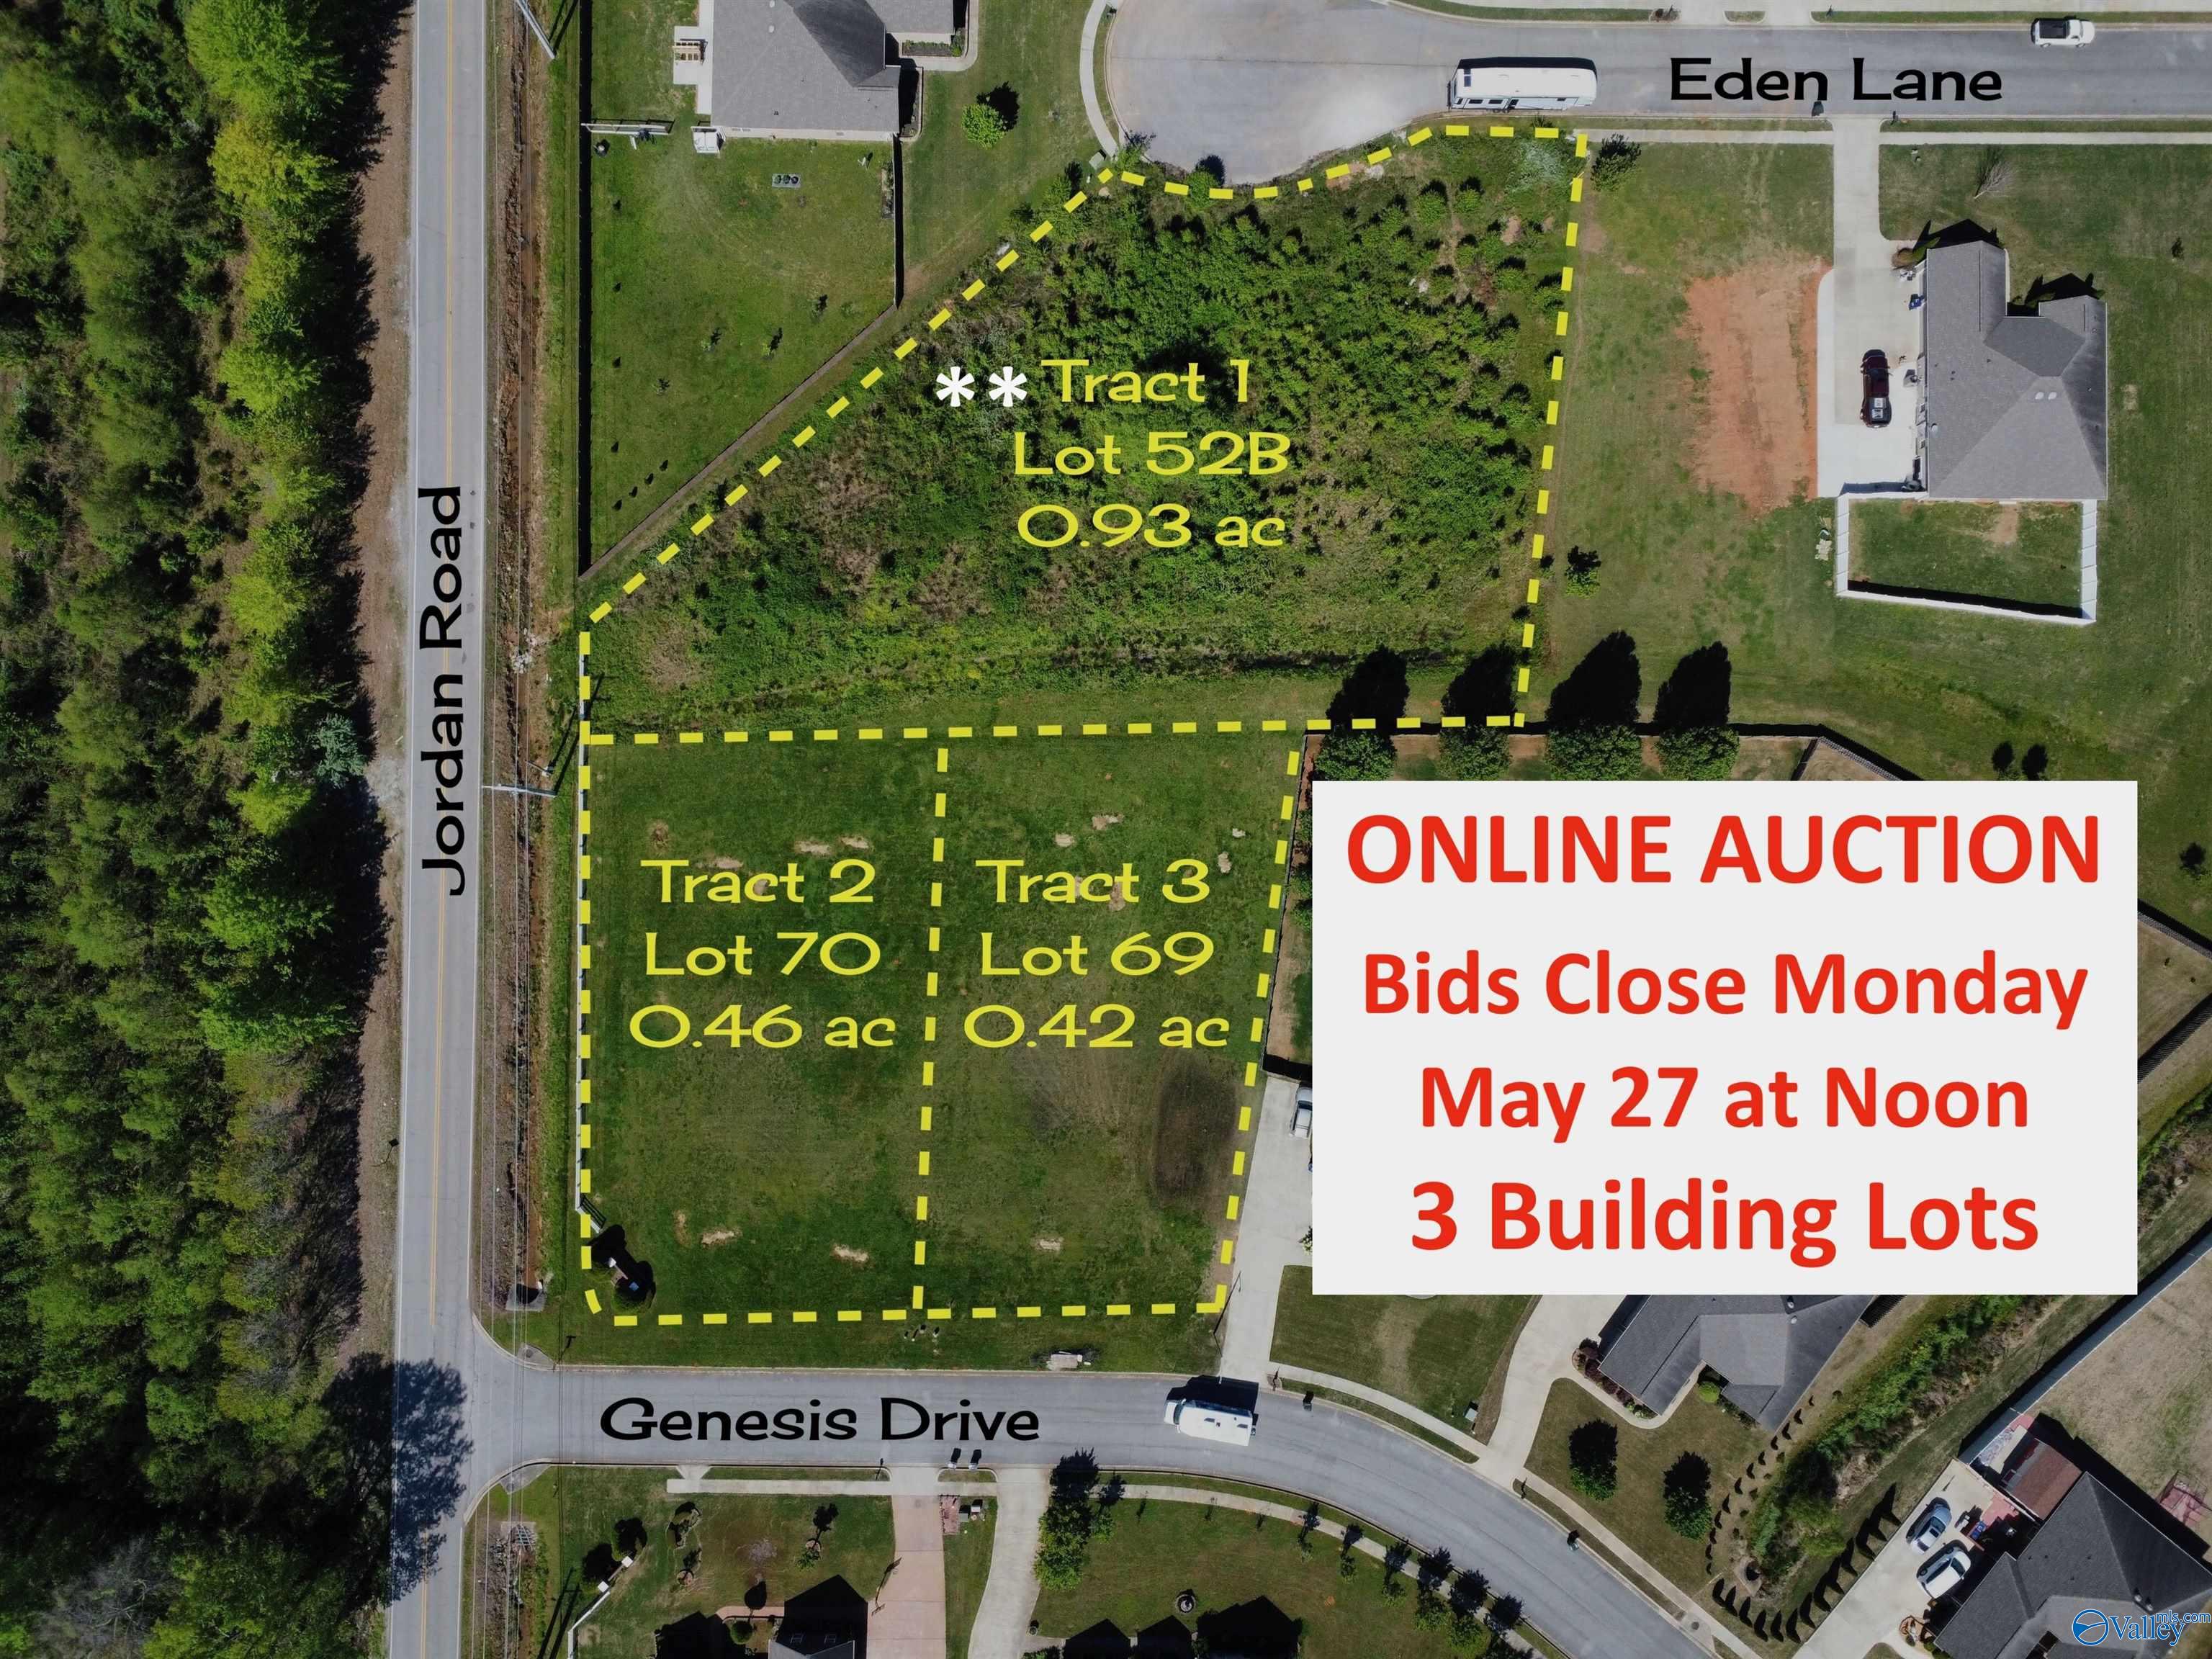 Property: Lot 52B Eden Lane,Huntsville, AL